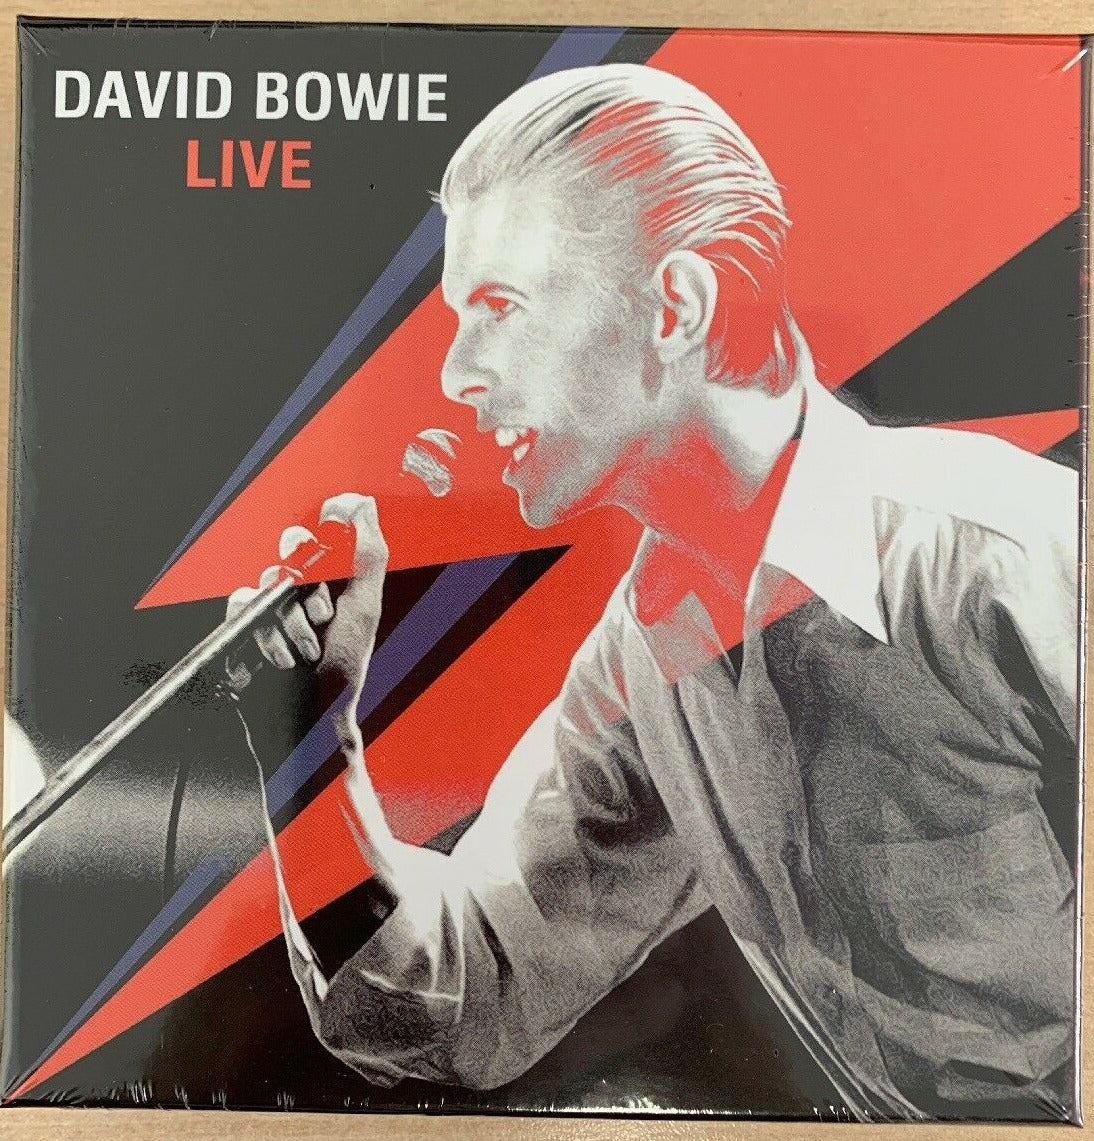 David Bowie 10 CD Live Box Set inc Montreal 1983, Rio 1990, Toyko 1978 plus more